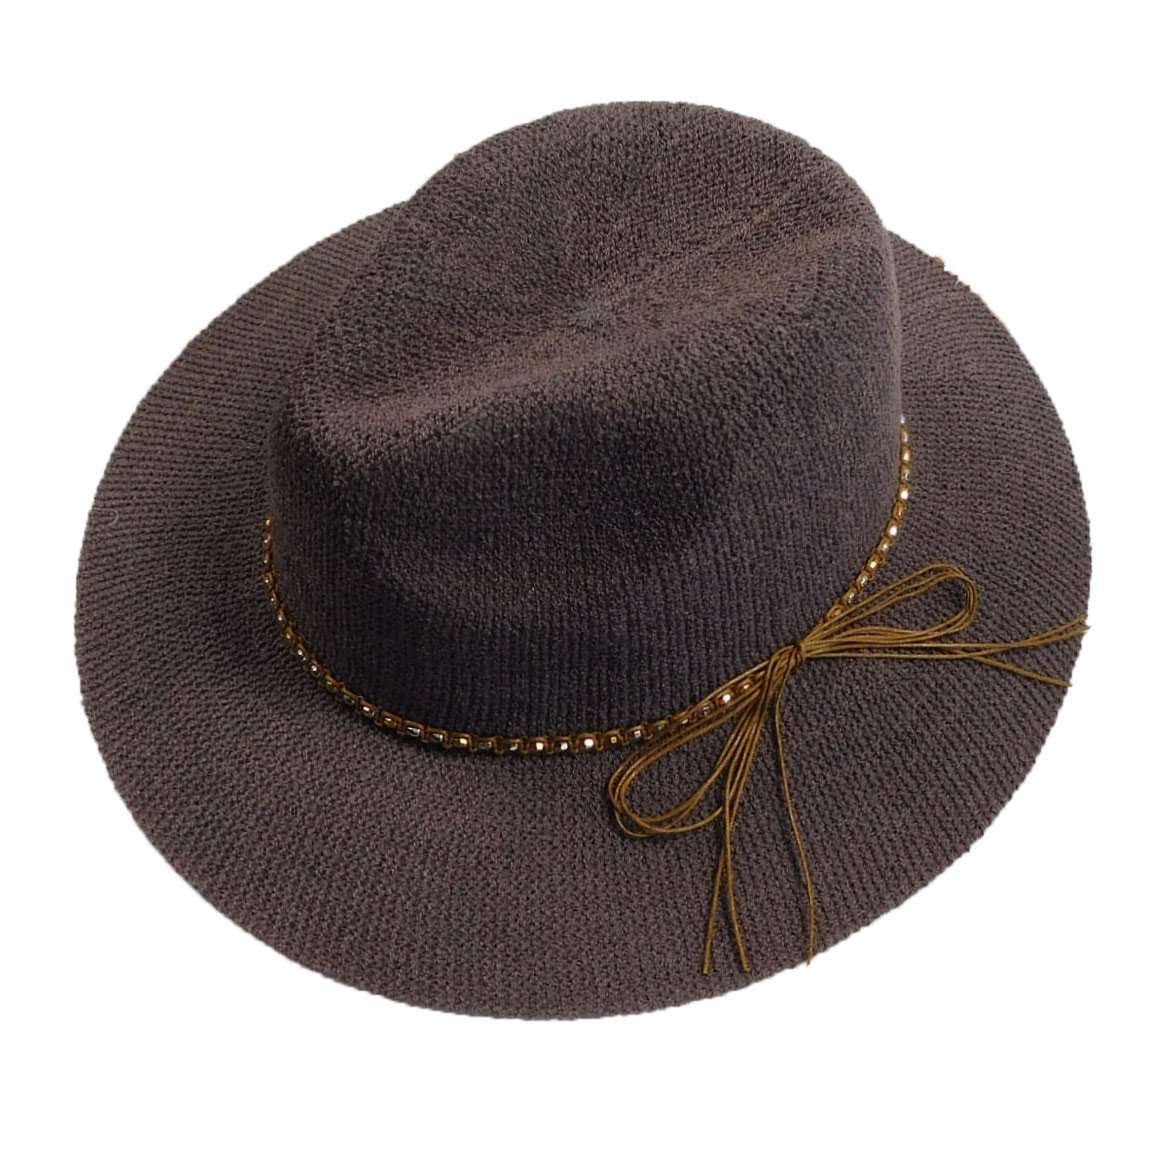 Knitted Panama Hat with Beaded Band - Grey Safari Hat Boardwalk Style Hats WWda3122GY Grey Medium (57 cm) 